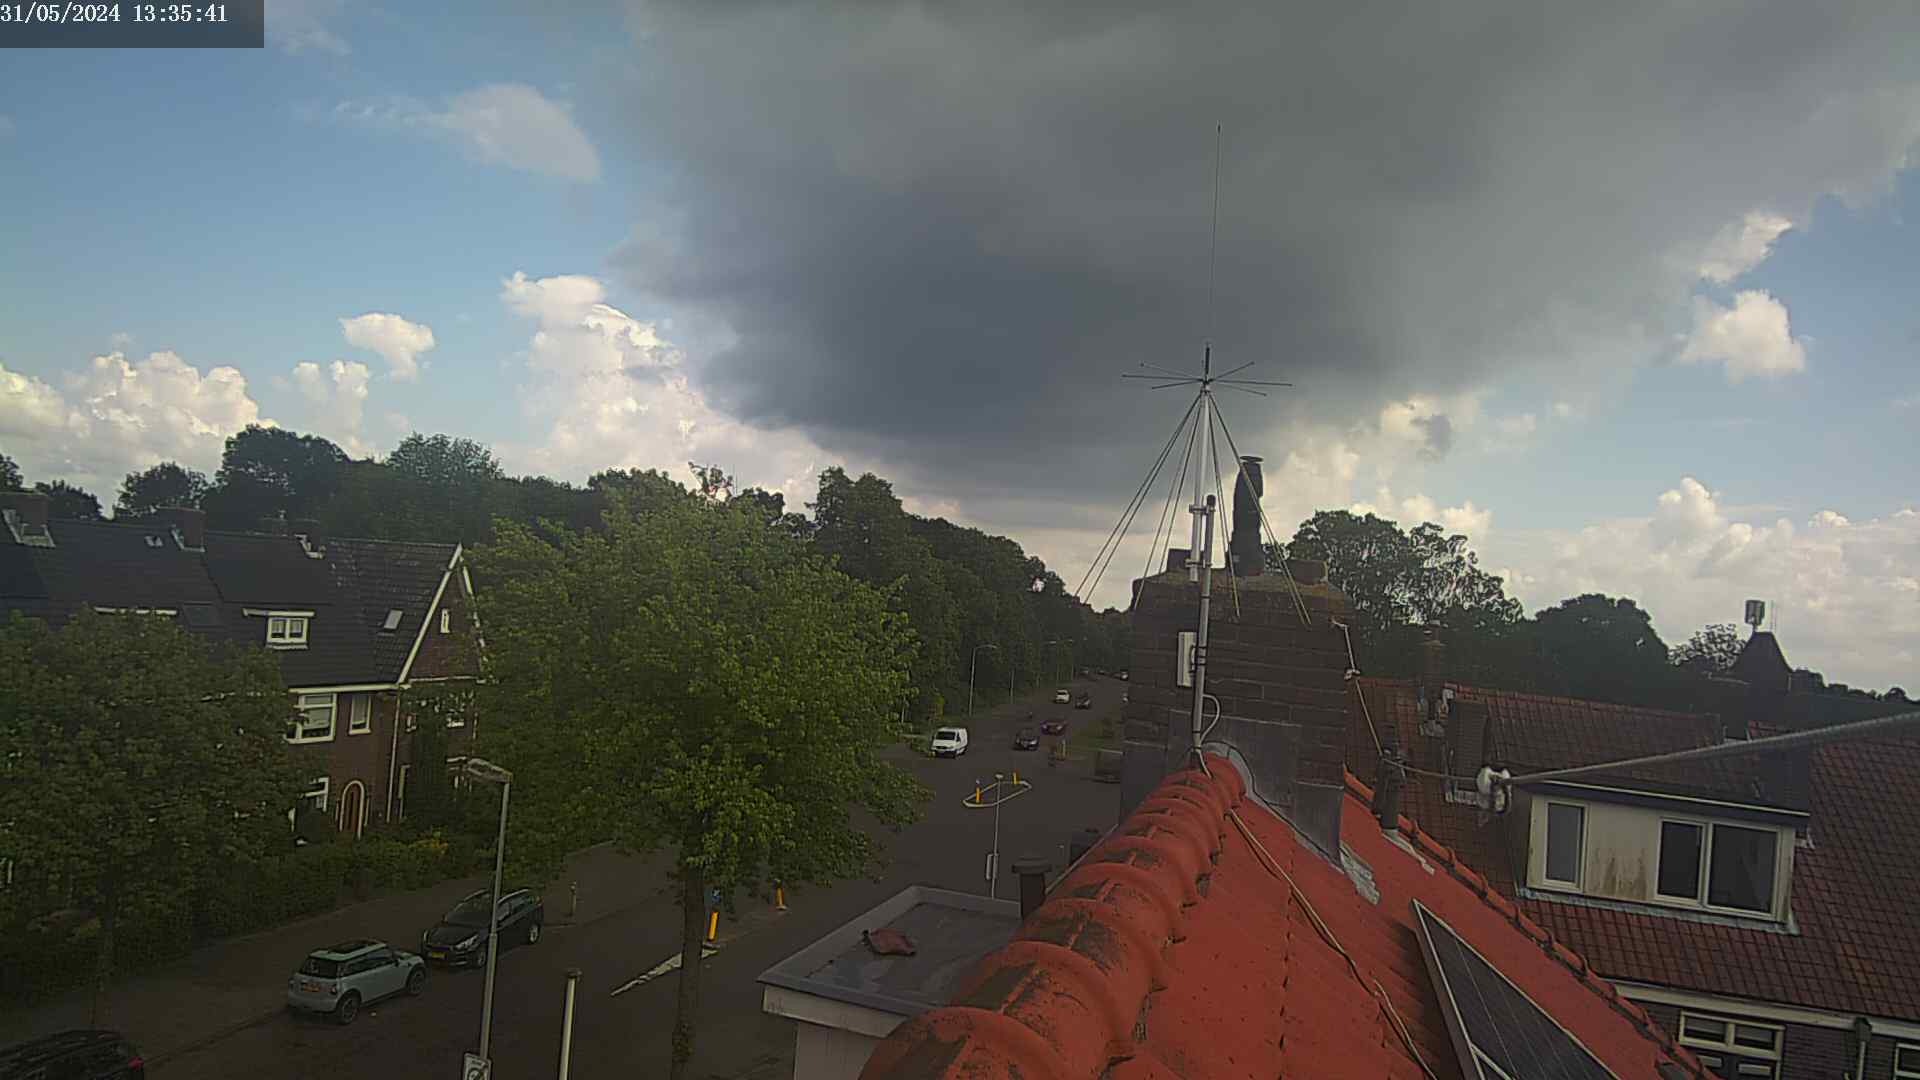 Haarlem Gio. 14:35